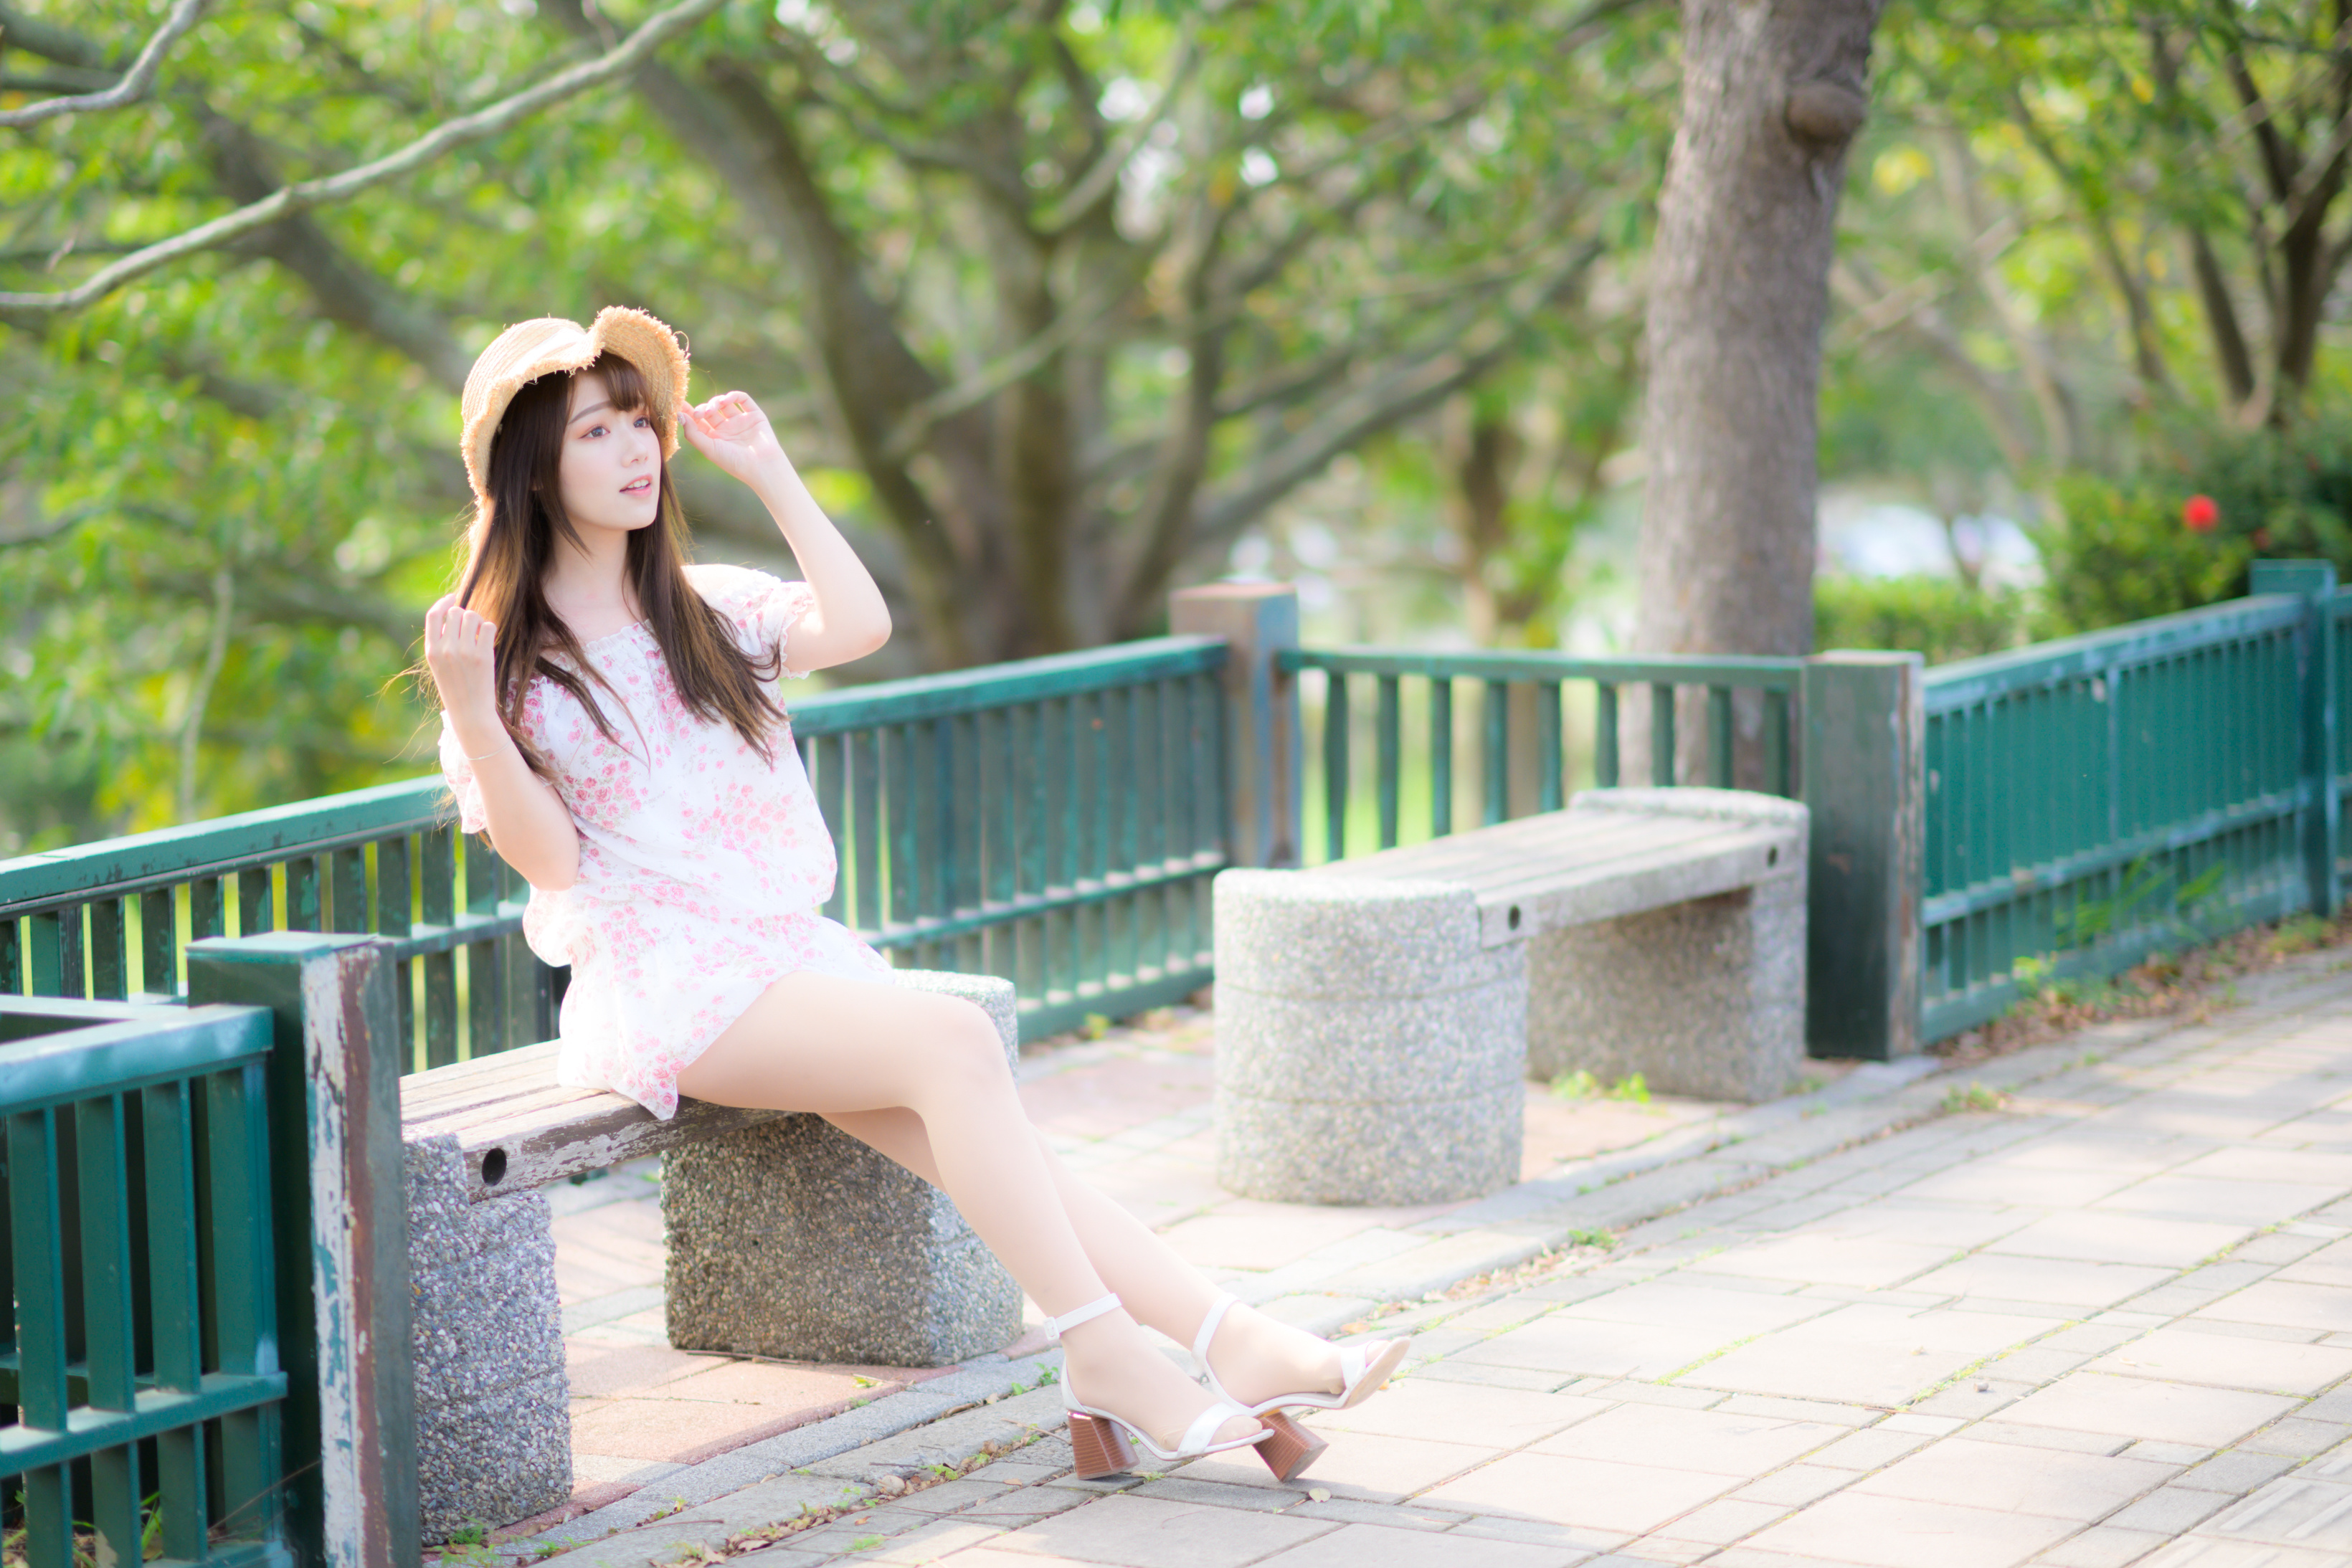 Asian Model Women Long Hair Dark Hair Sitting Depth Of Field Straw Hat Bench Trees 3280x2187